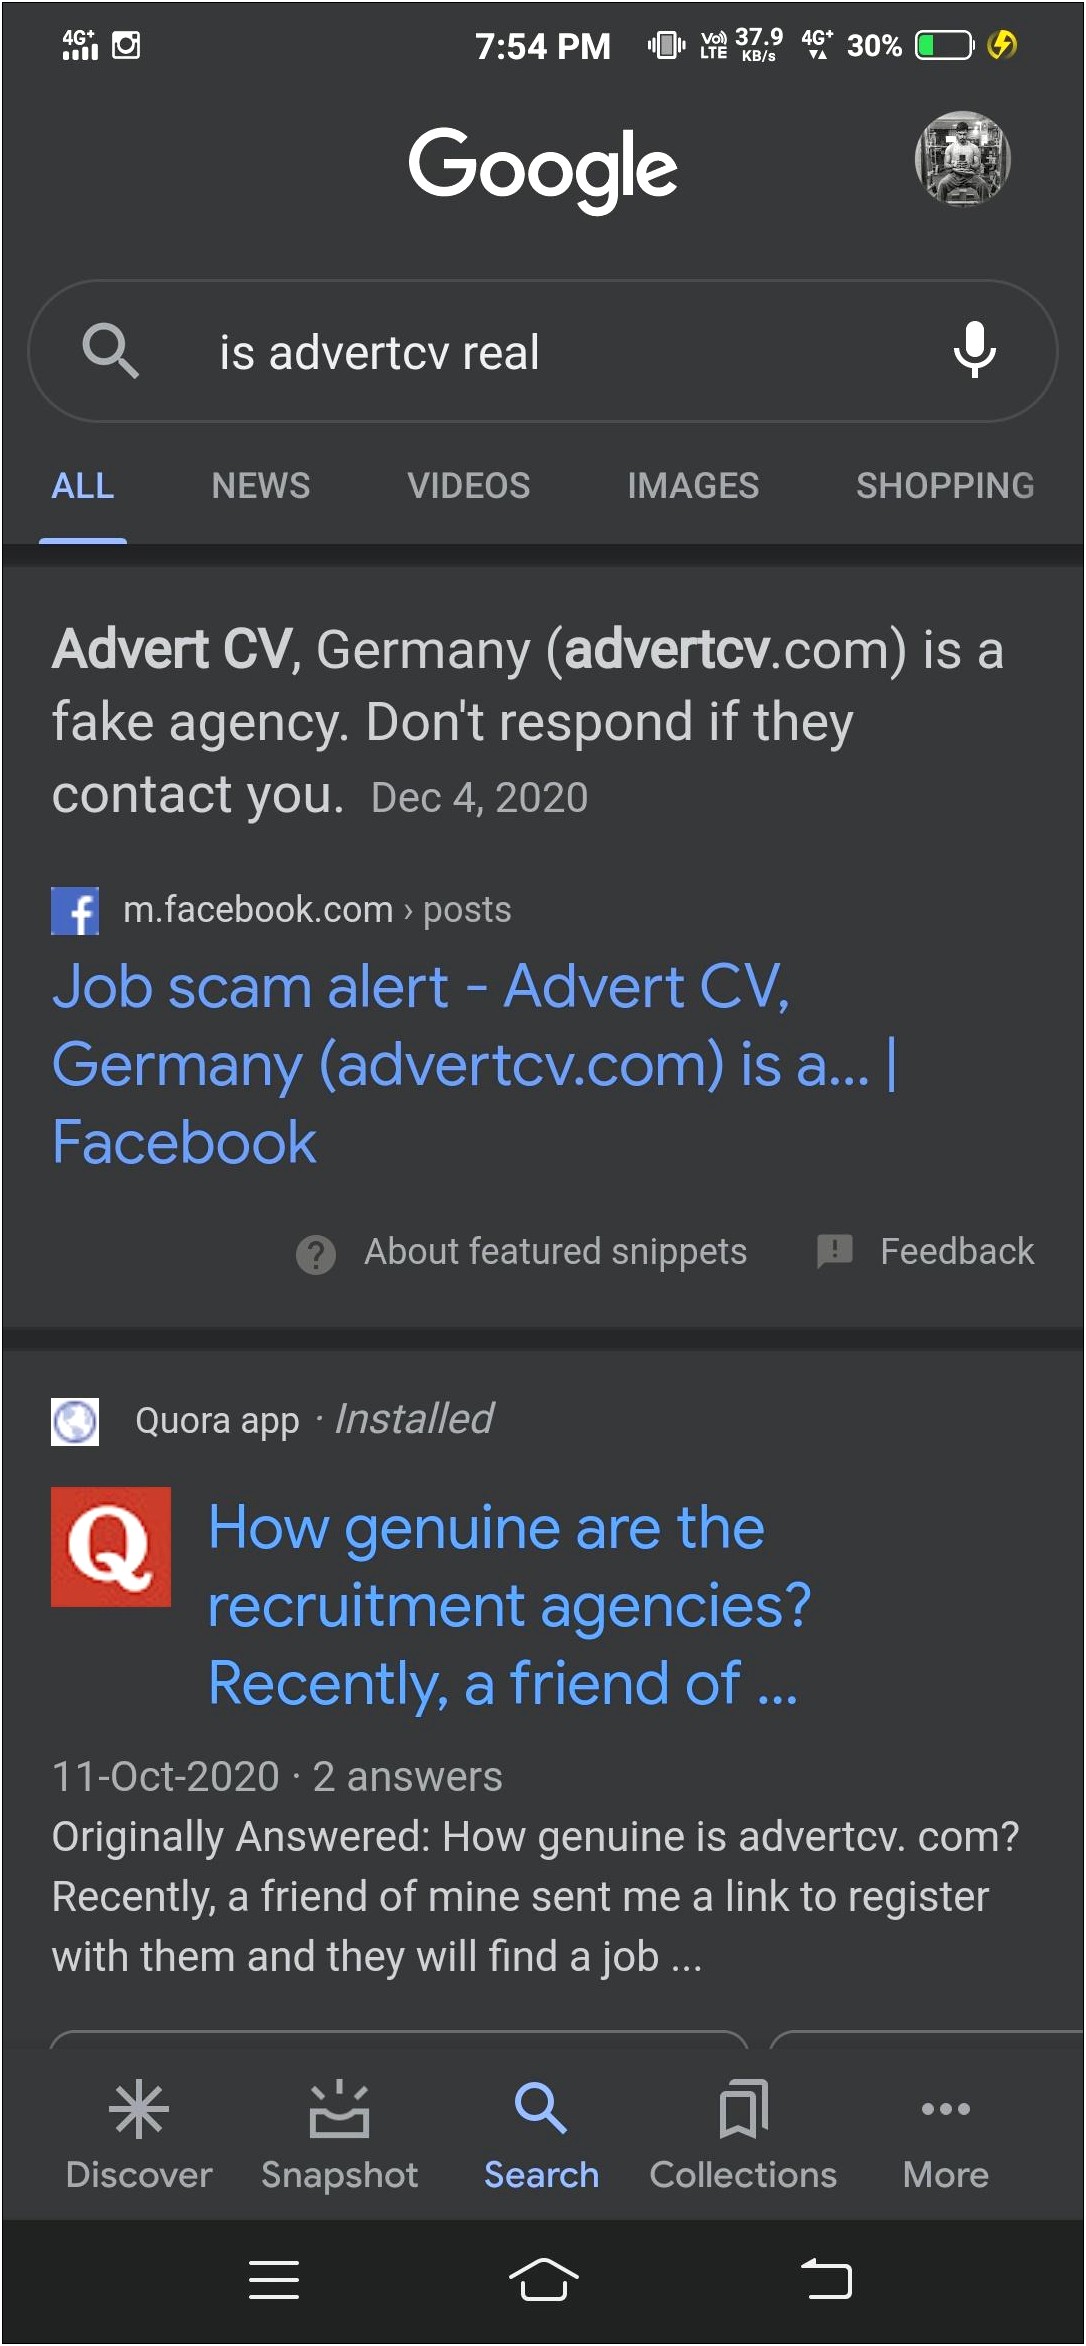 Can False Job Advertisements Use My Resume